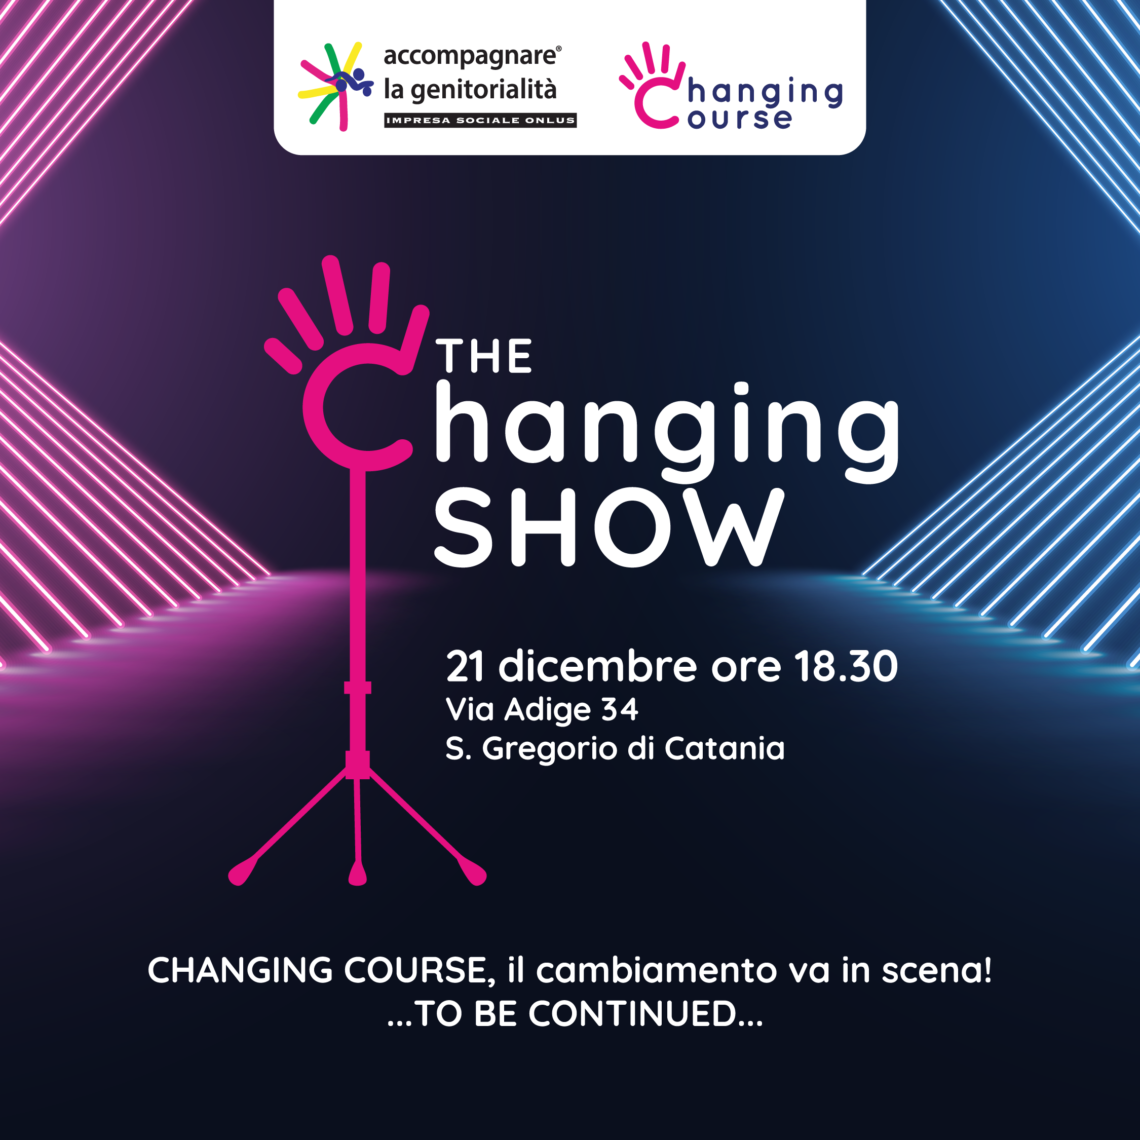 “The Changing Show”: la serata conclusiva del Changing Course